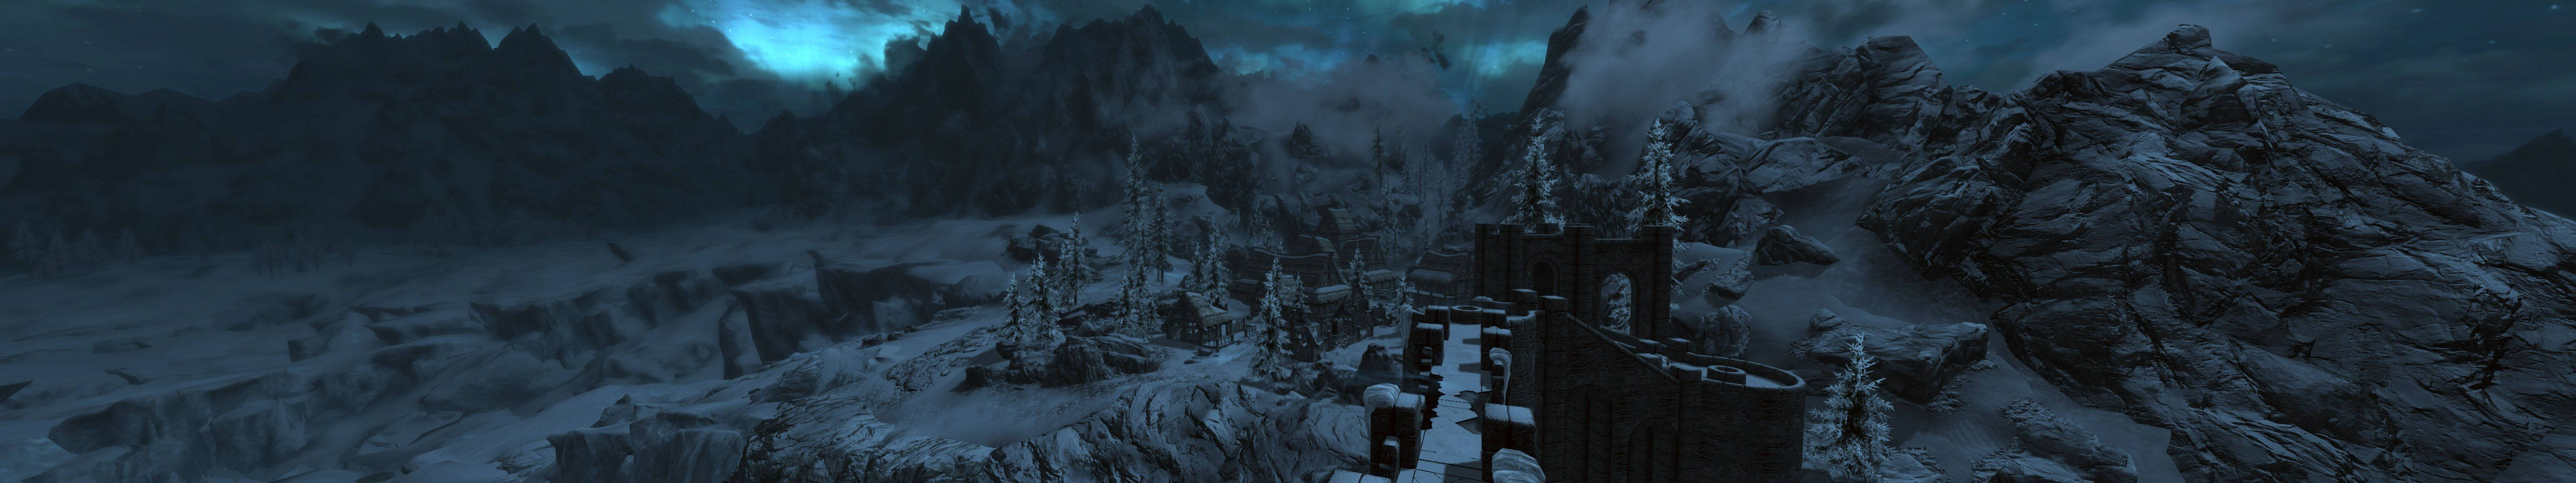 Dark Castle Mountain In Winter Background